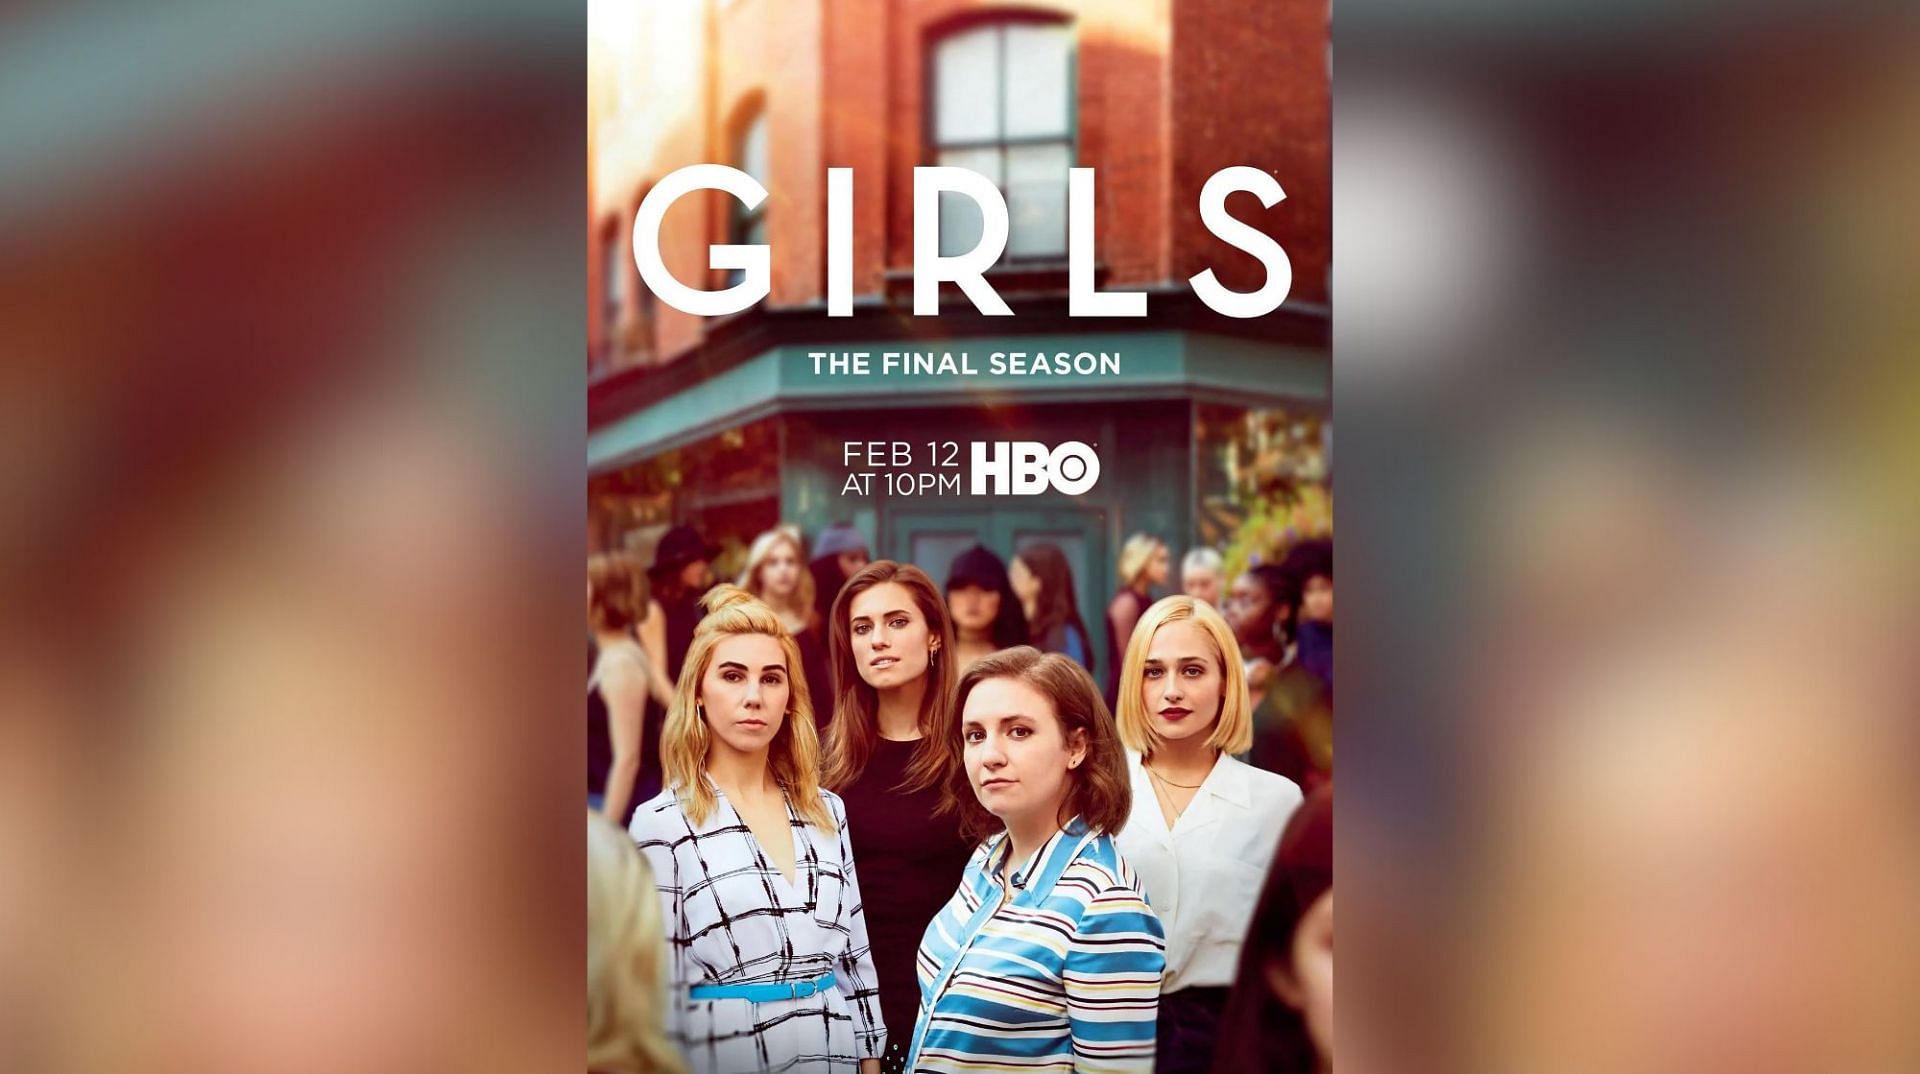 Girls (Image via HBO)